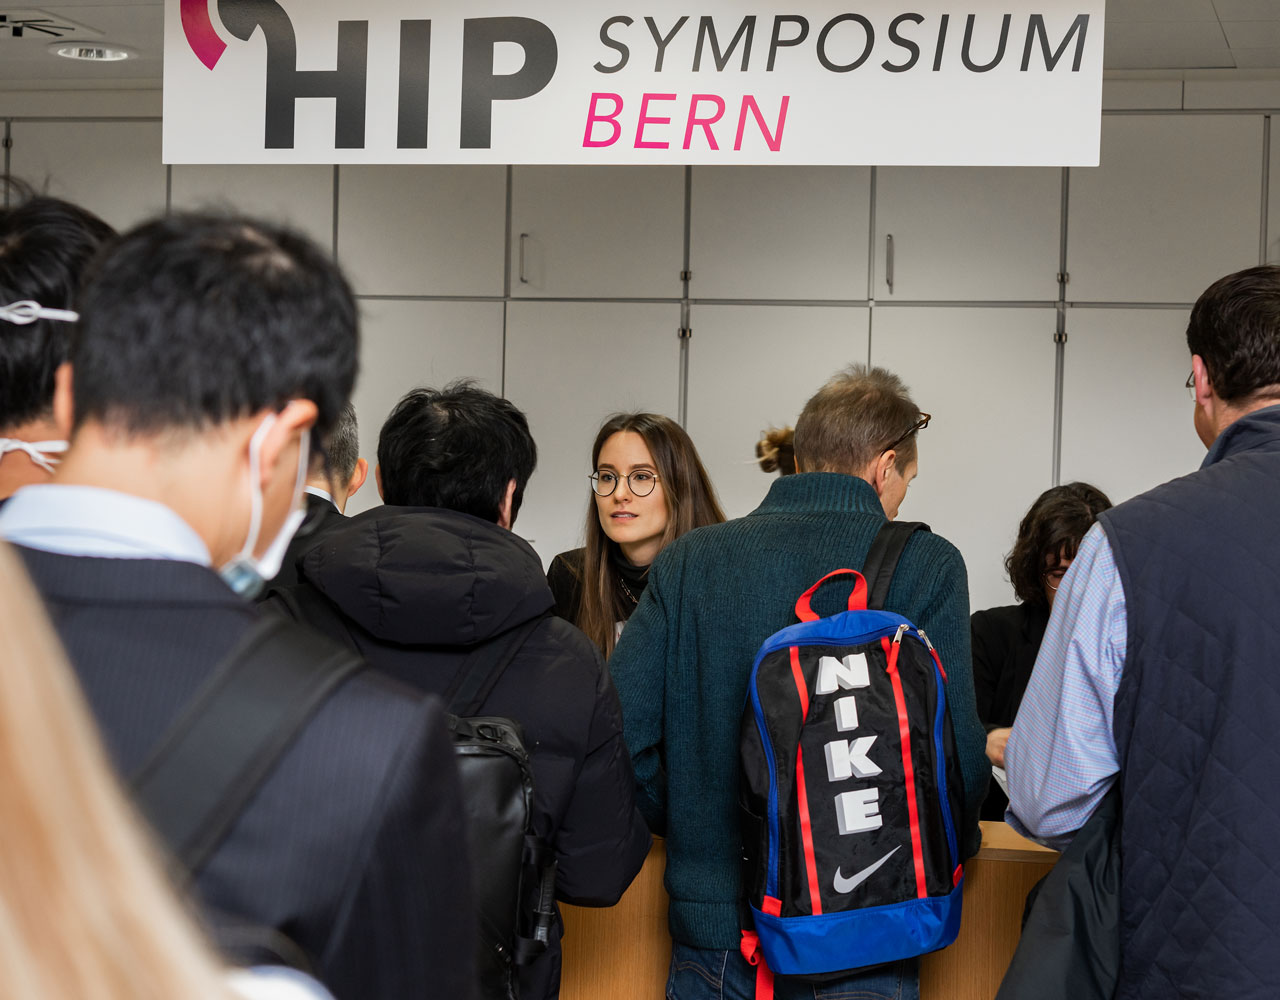 Hüftsymposium Bern - Hip Symposium Bern